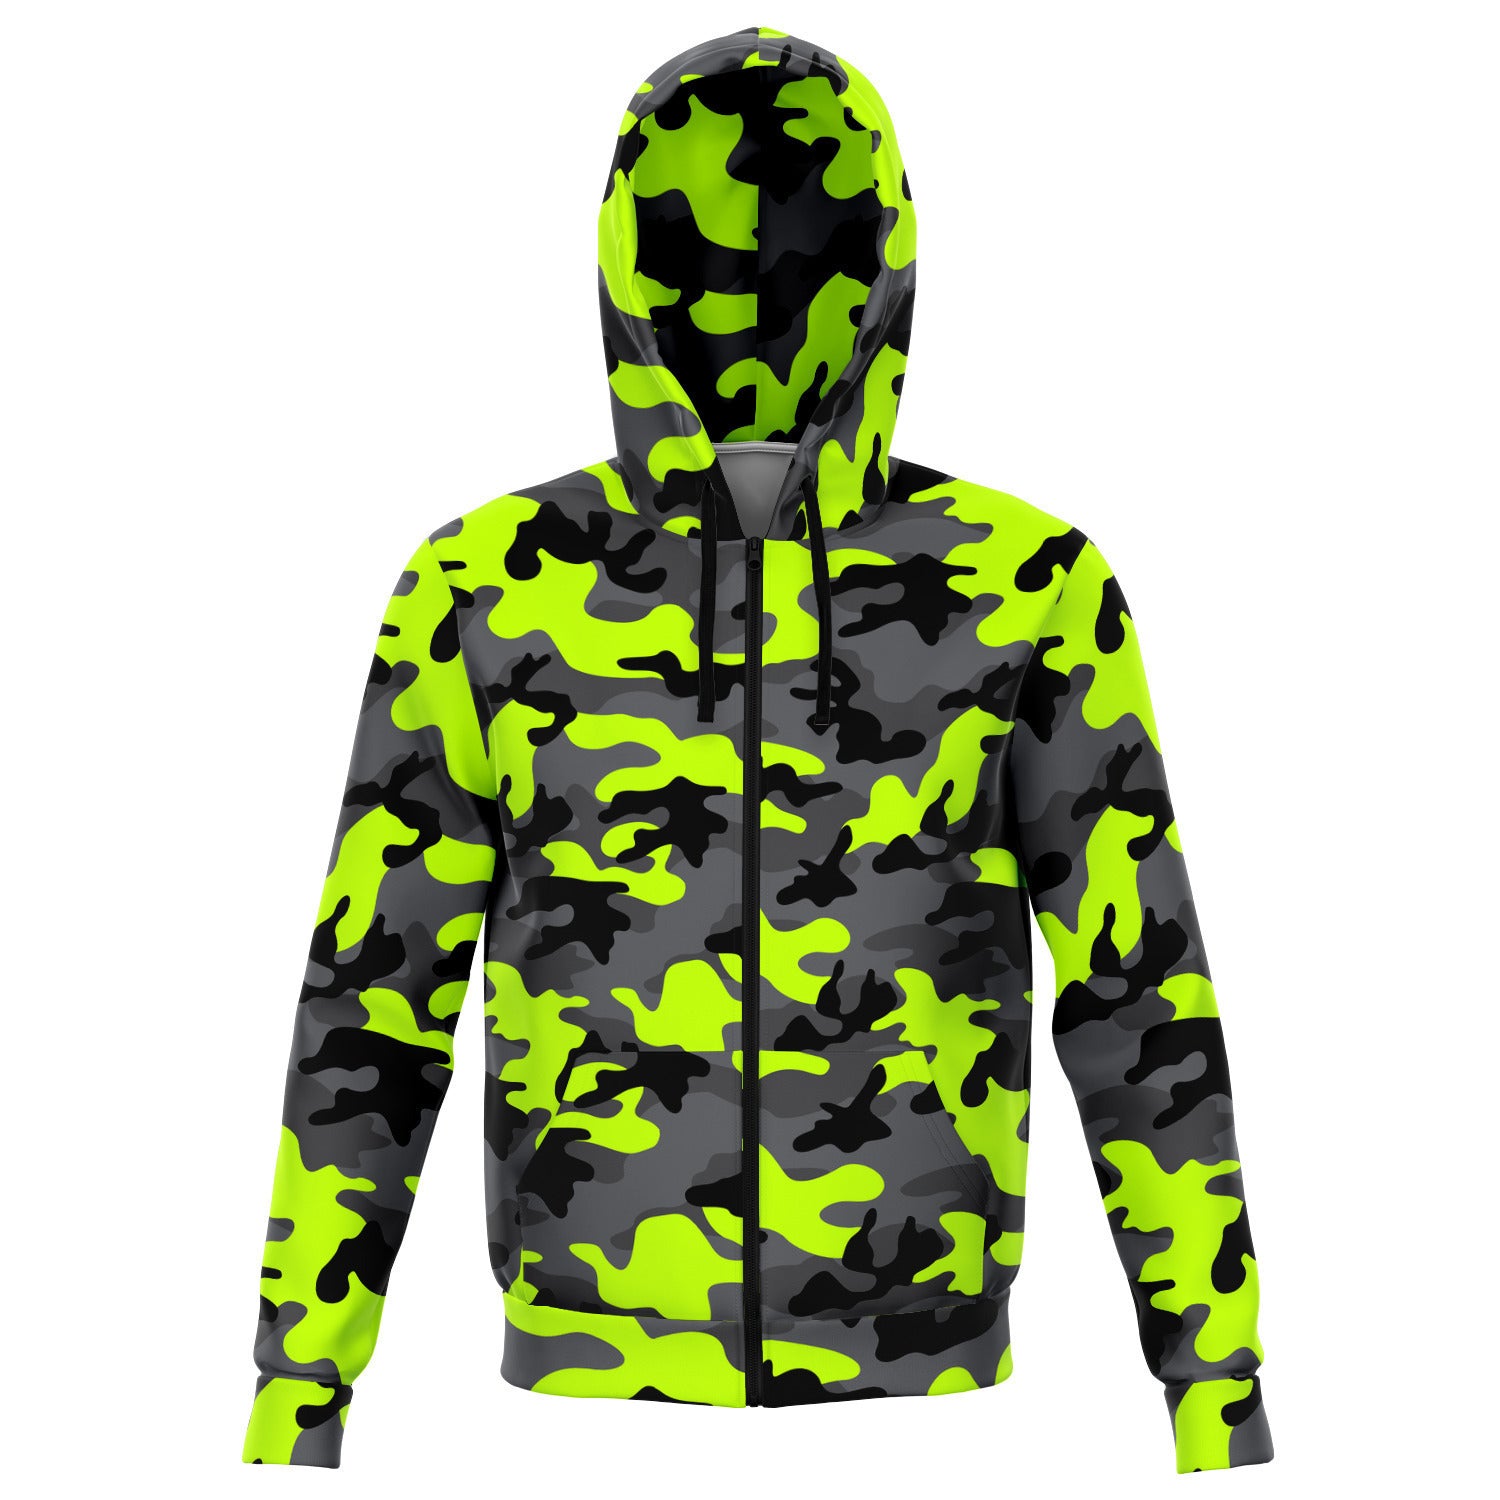 Unisex Fluorescent Neon Melon Green Camouflage Athletic Zip-Up Hoodie